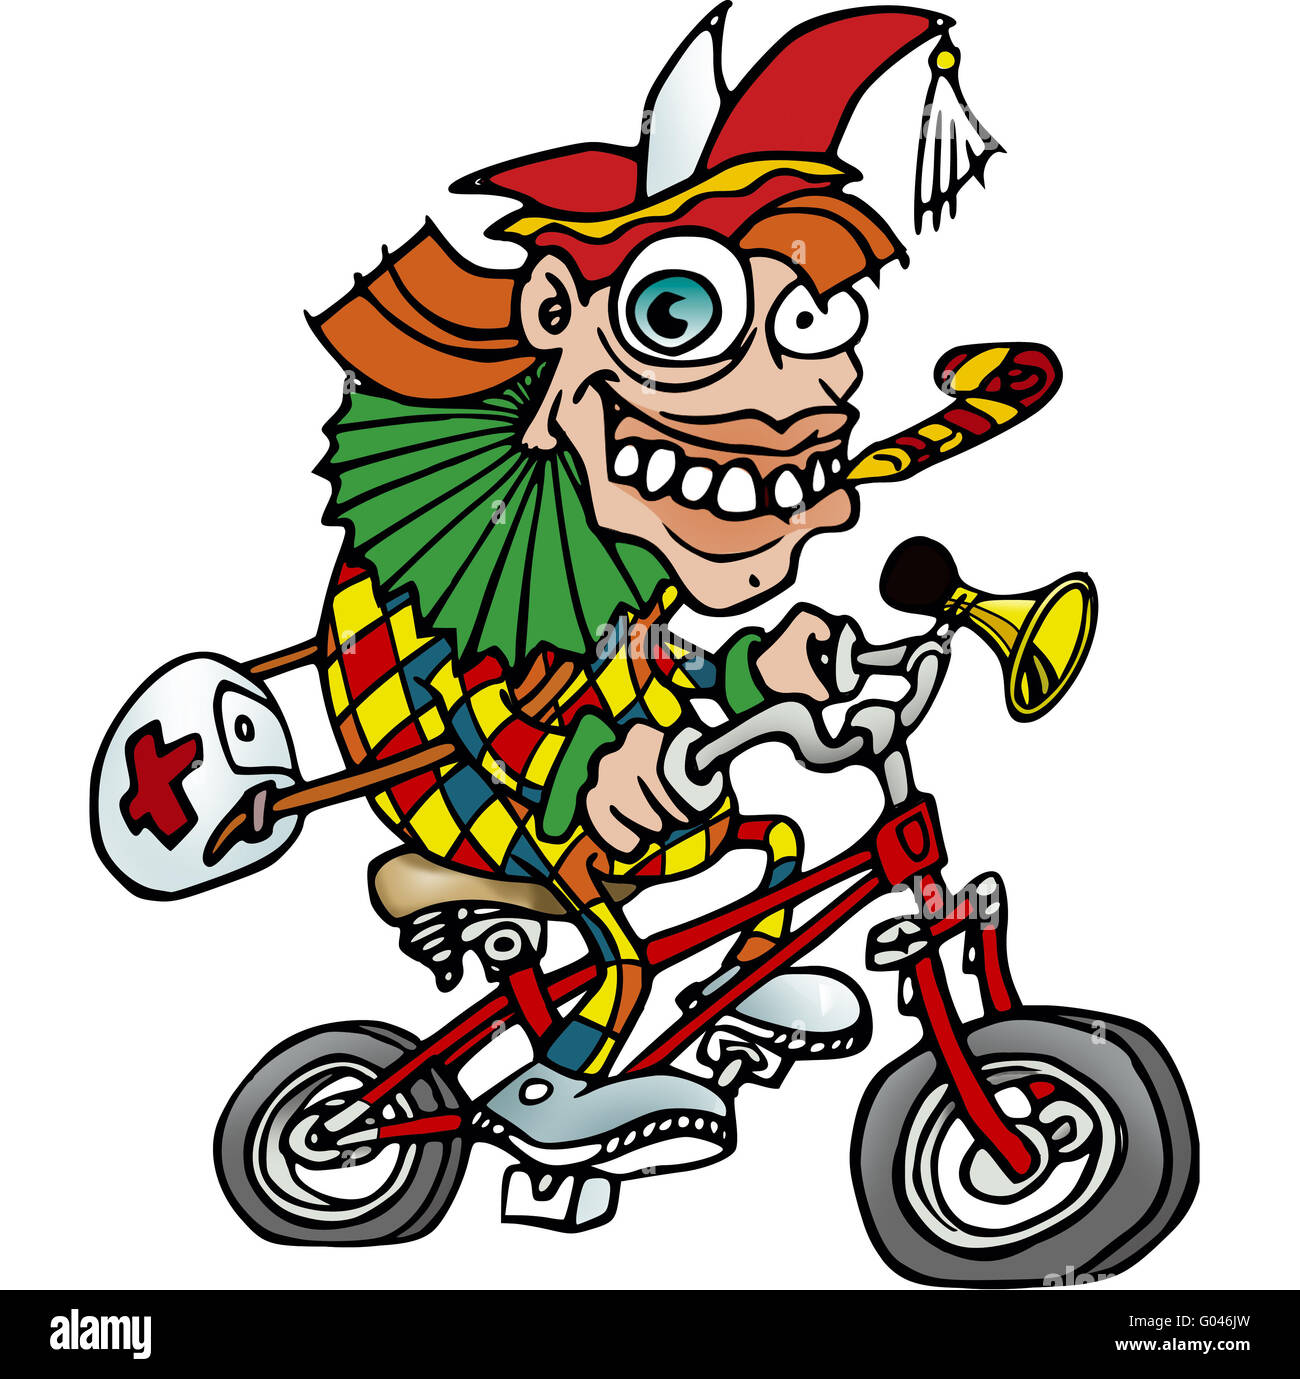 Il carnevale clown in bici Foto stock - Alamy